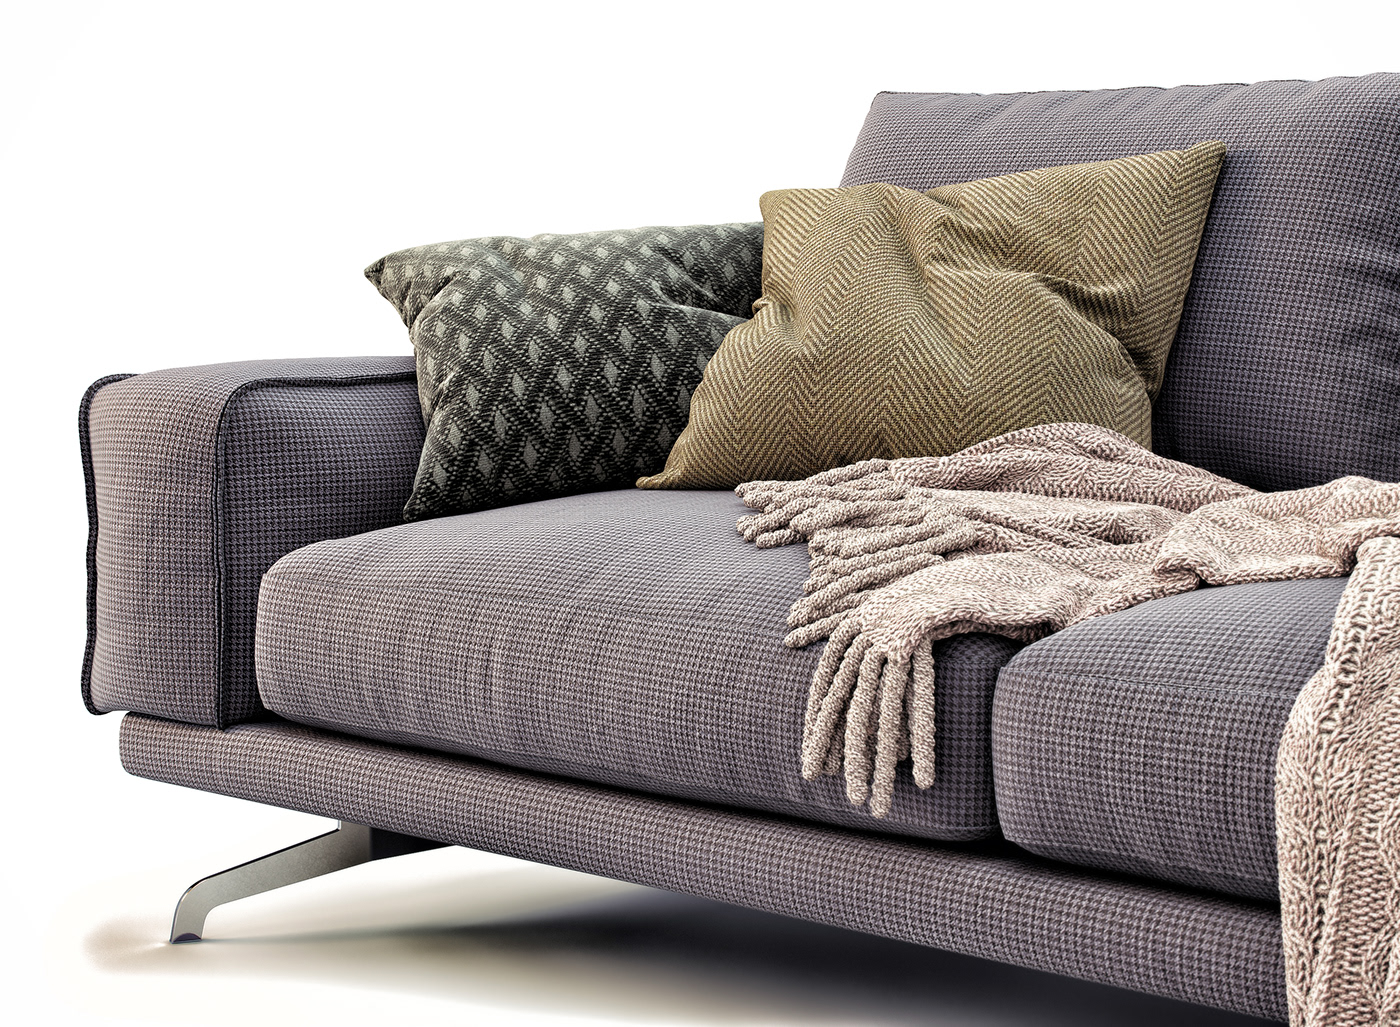 design furniture Interior MaxDivani modular nando pillow plaid sofa